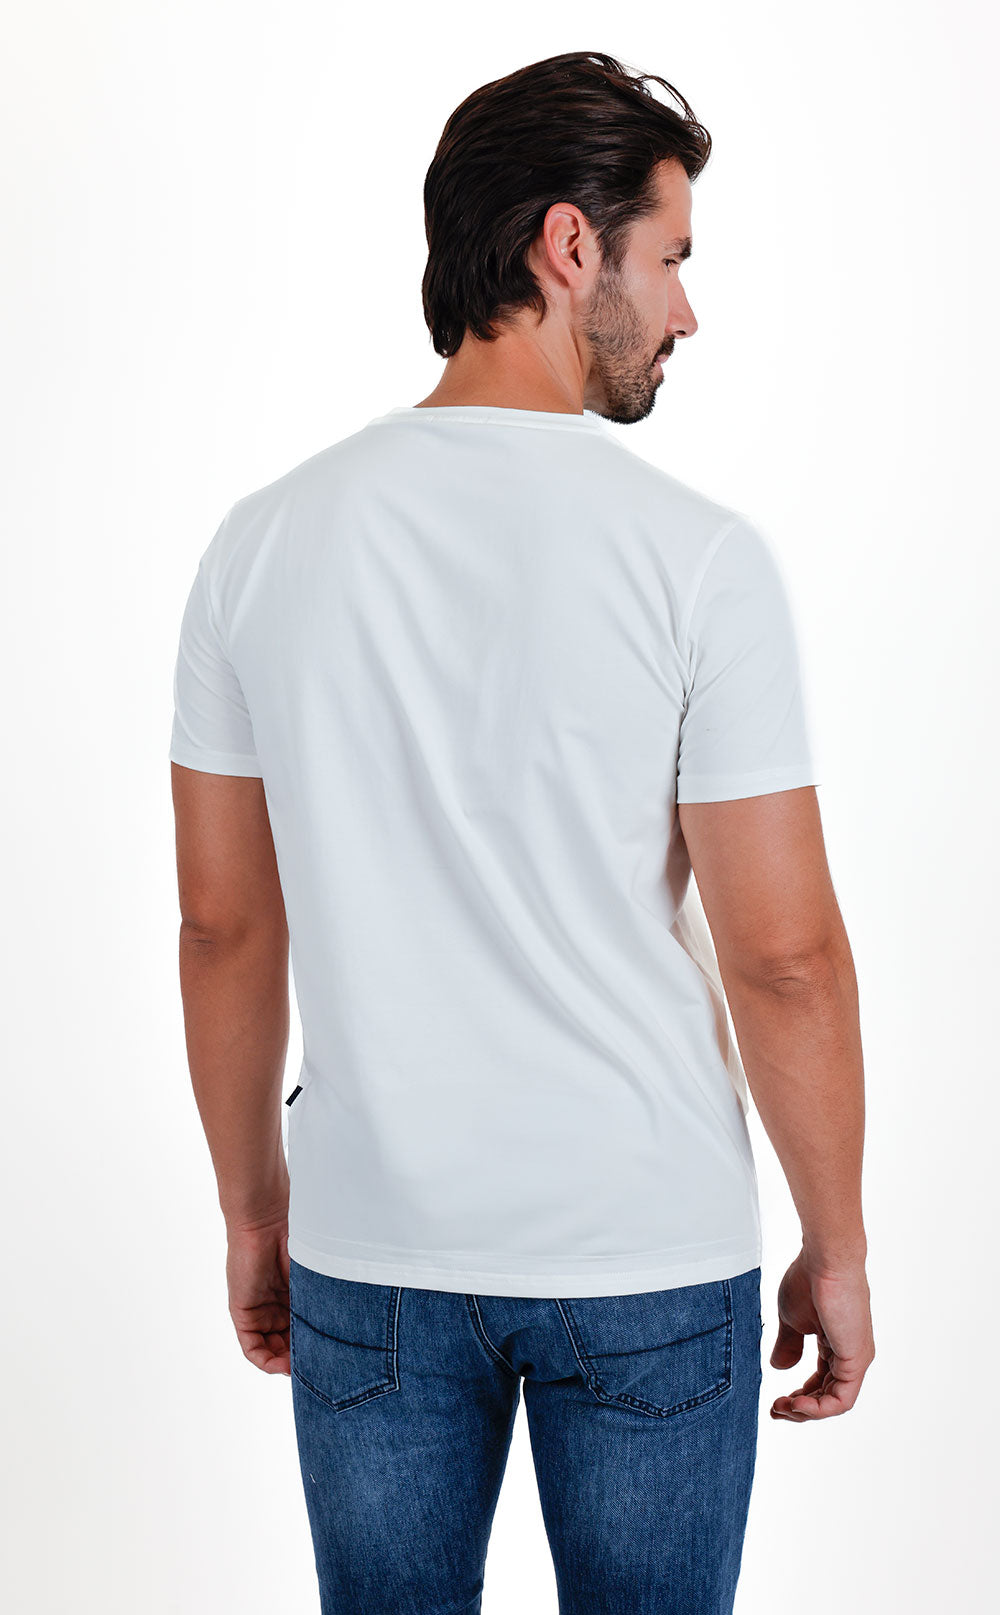 BARABAS Men's Basic Solid Color Crew-neck T-shirts ST933 White